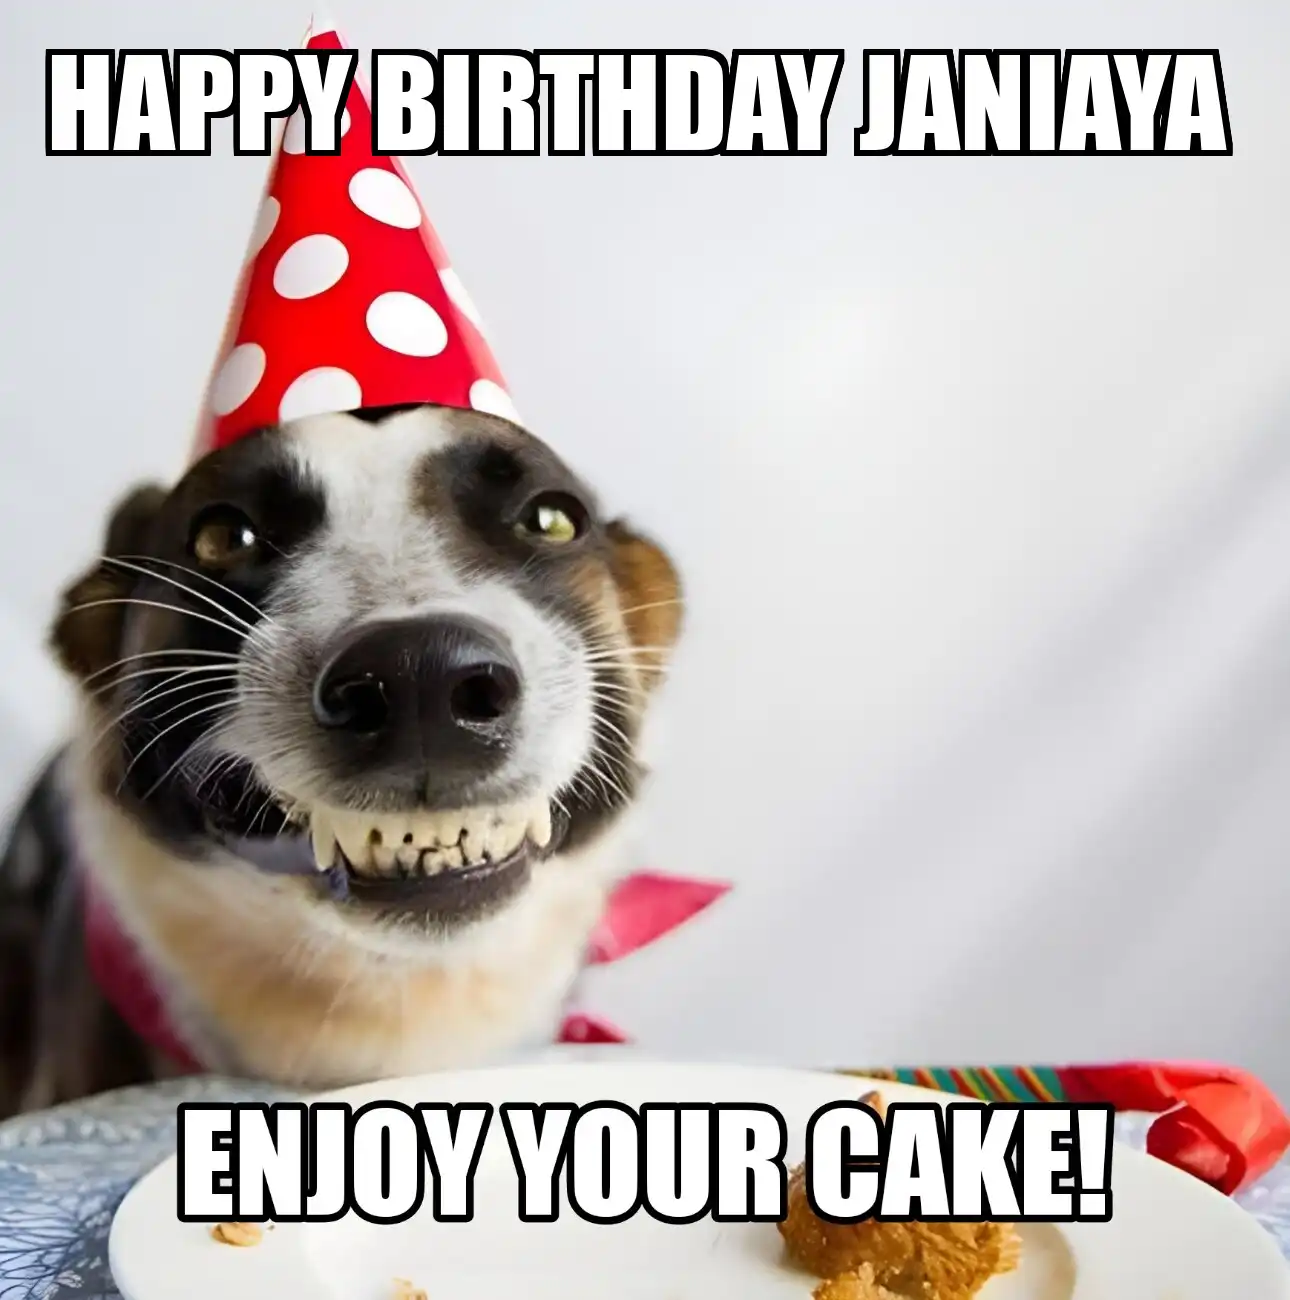 Happy Birthday Janiaya Enjoy Your Cake Dog Meme